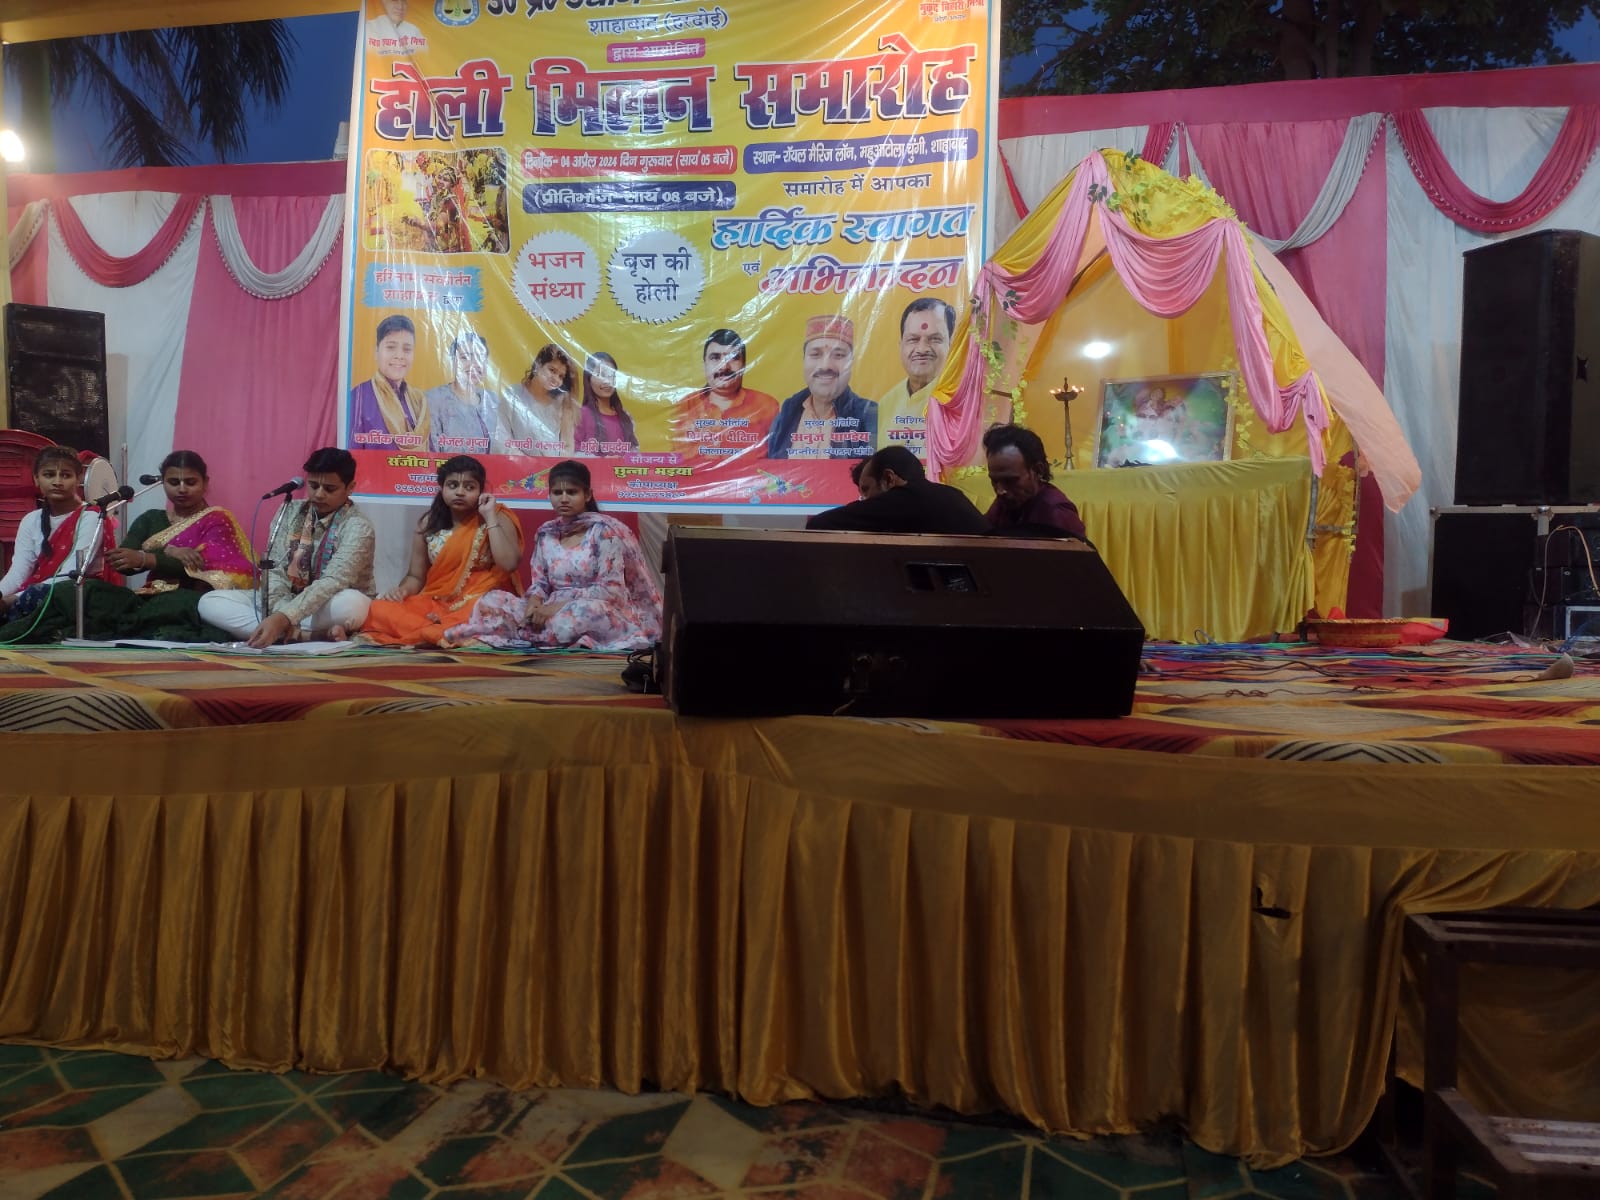 Holi Milan Ceremony and Sankirtan organized by Uttar Pradesh Industry Trade Board